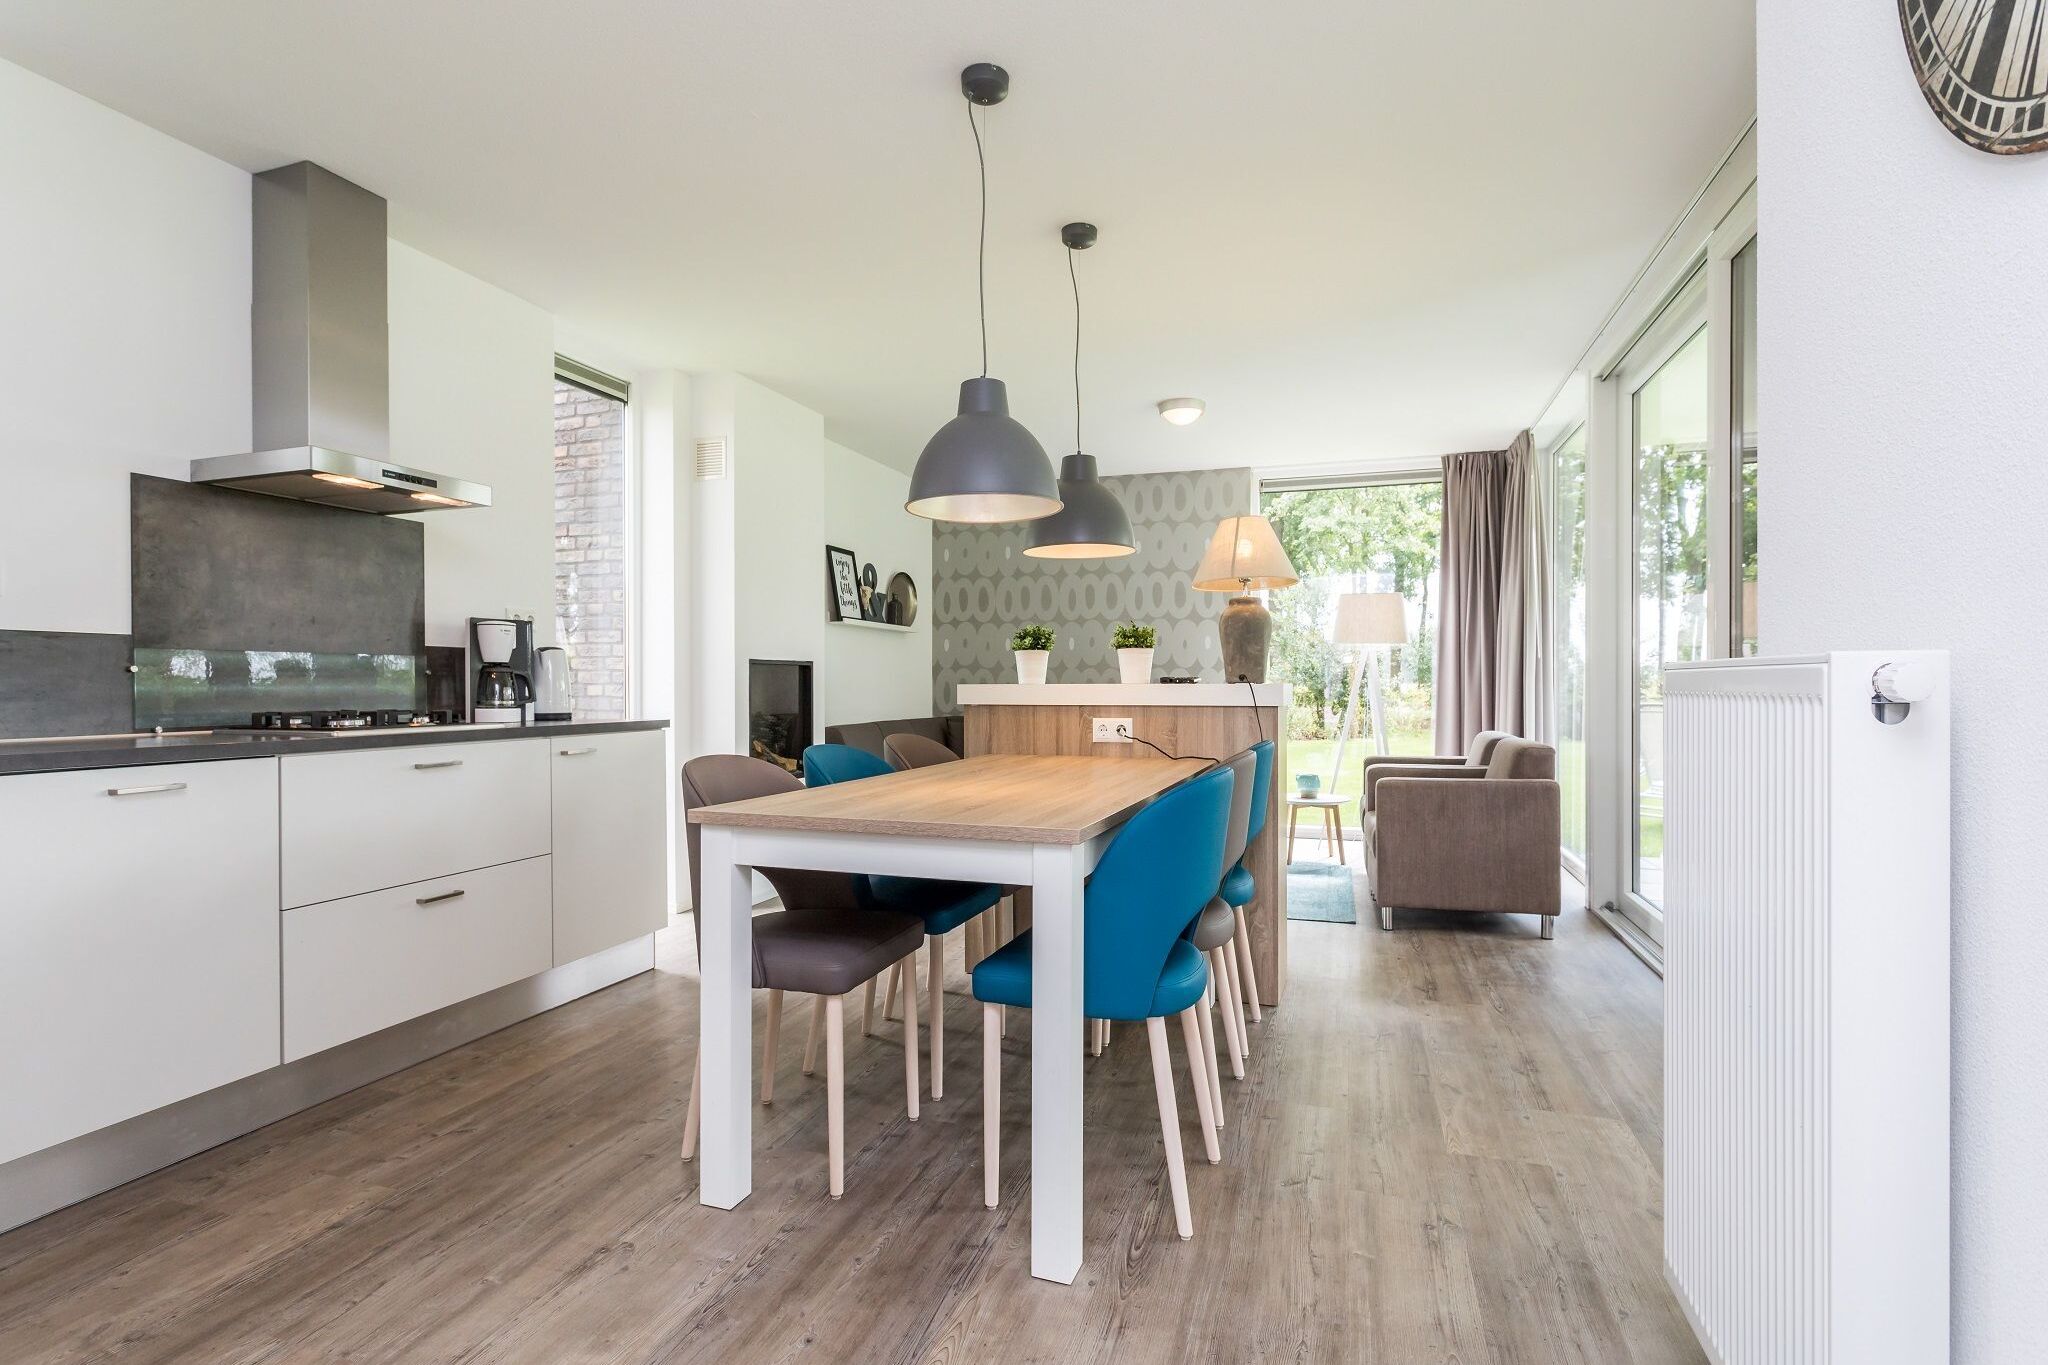 Modern Villa with wellness in Limburg